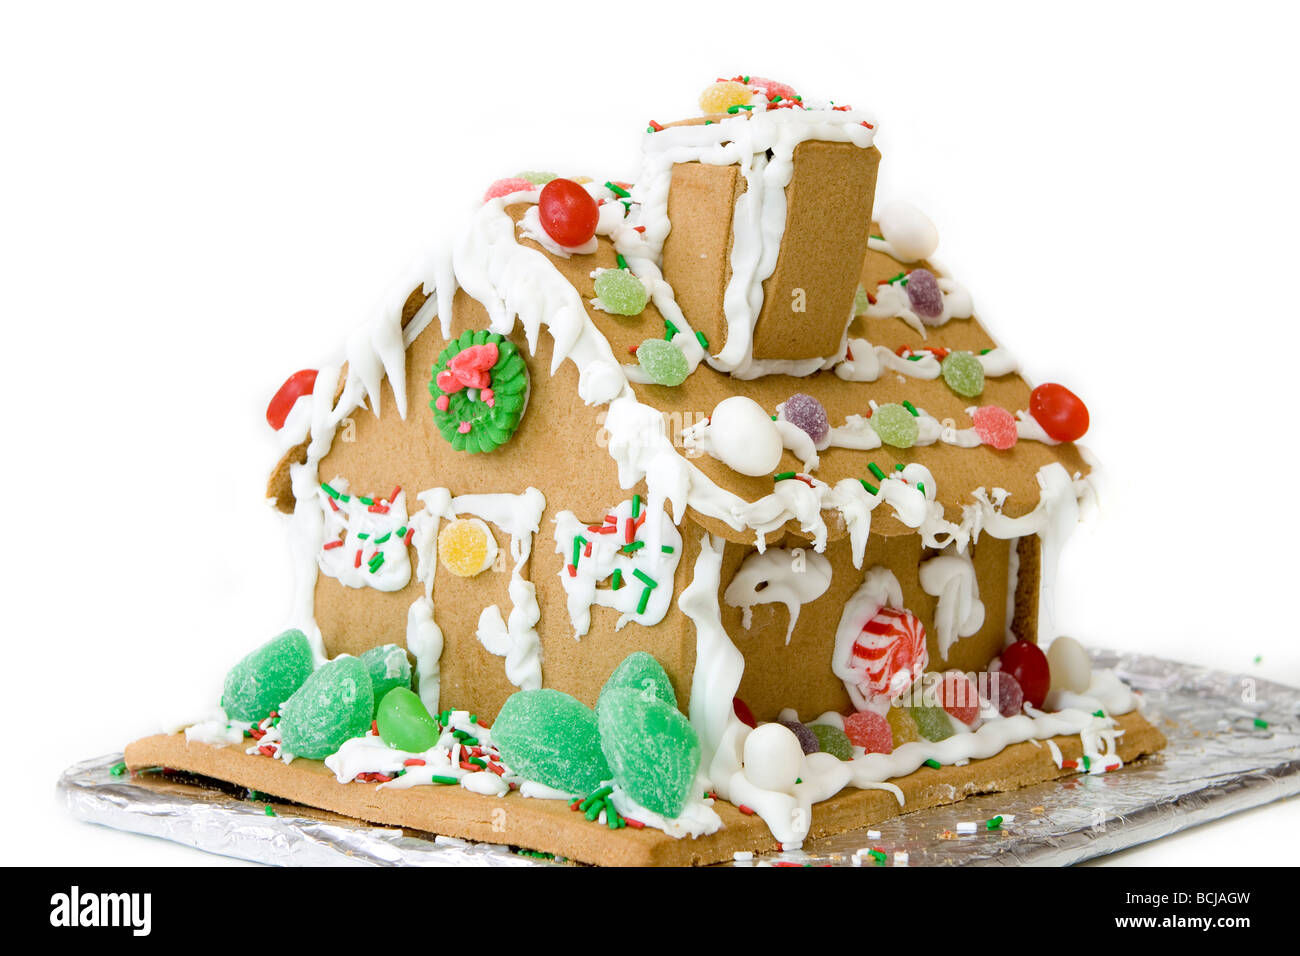 custom made gingerbread house Stock Photo